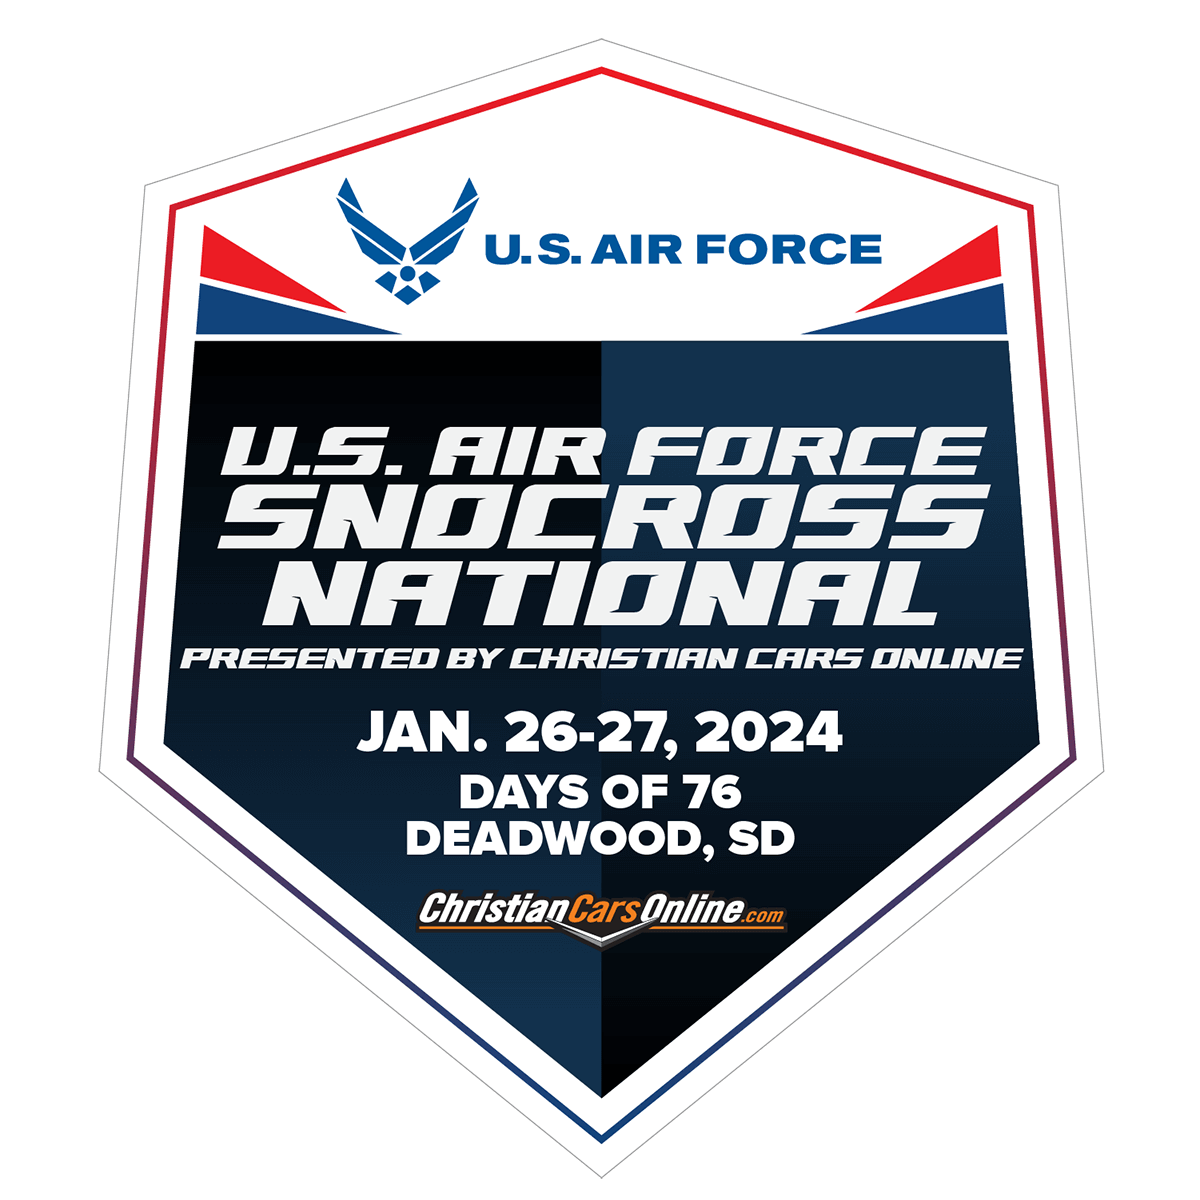 U.S. AIR FORCE SNOCROSS NATIONAL